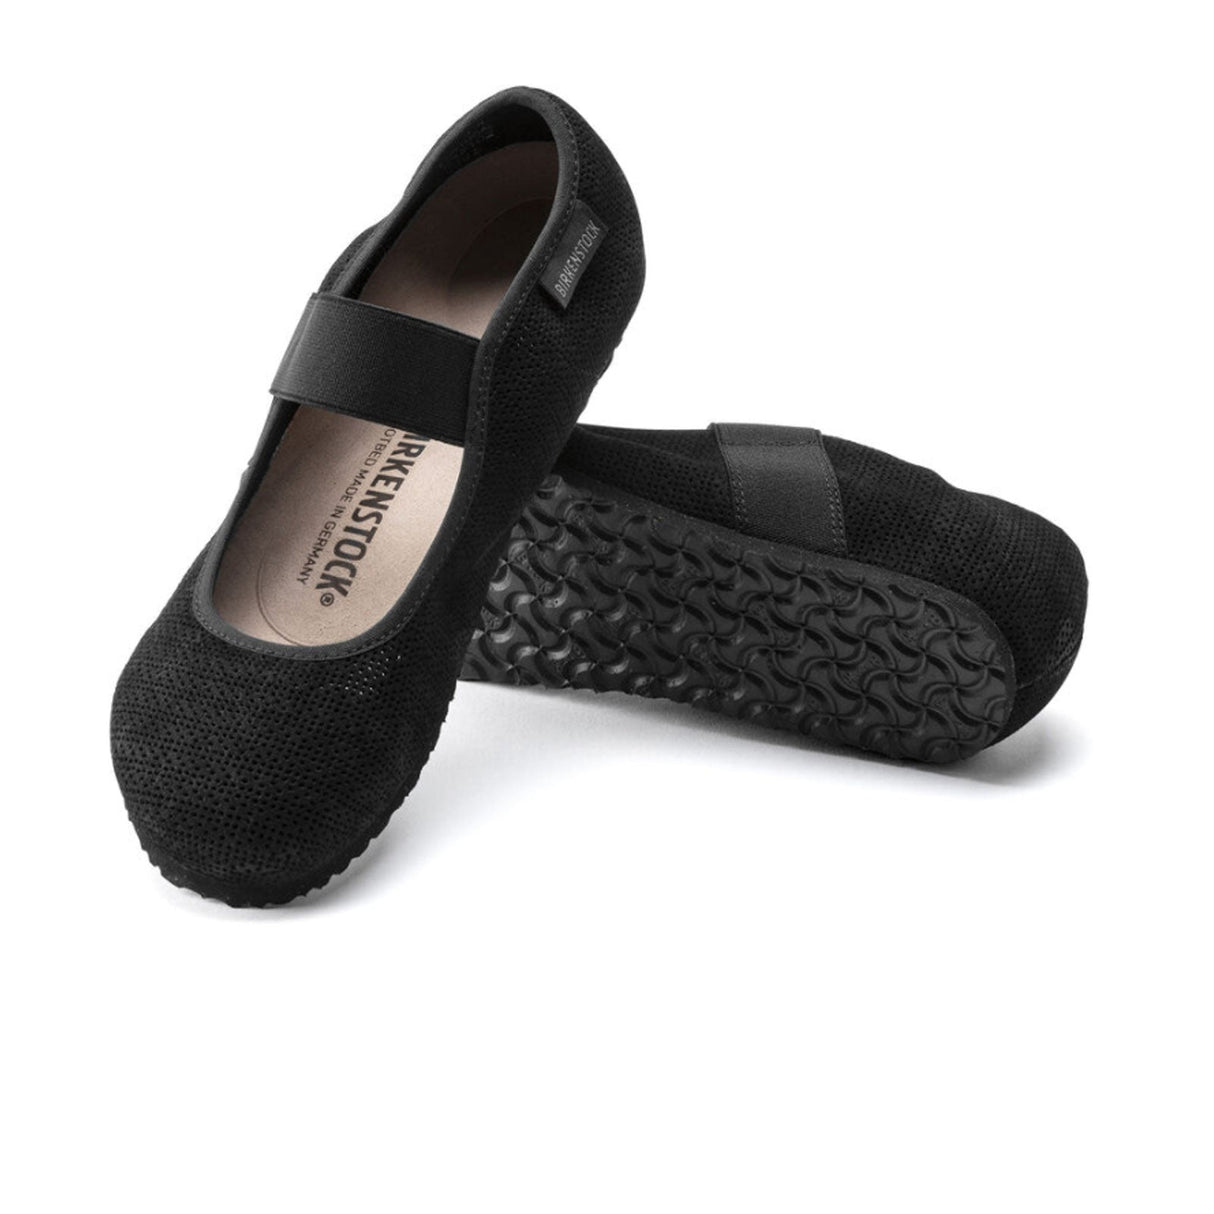 Birkenstock Tess Embossed Leather Narrow Mary Jane (Women) - Black Dress-Casual - Mary Janes - The Heel Shoe Fitters